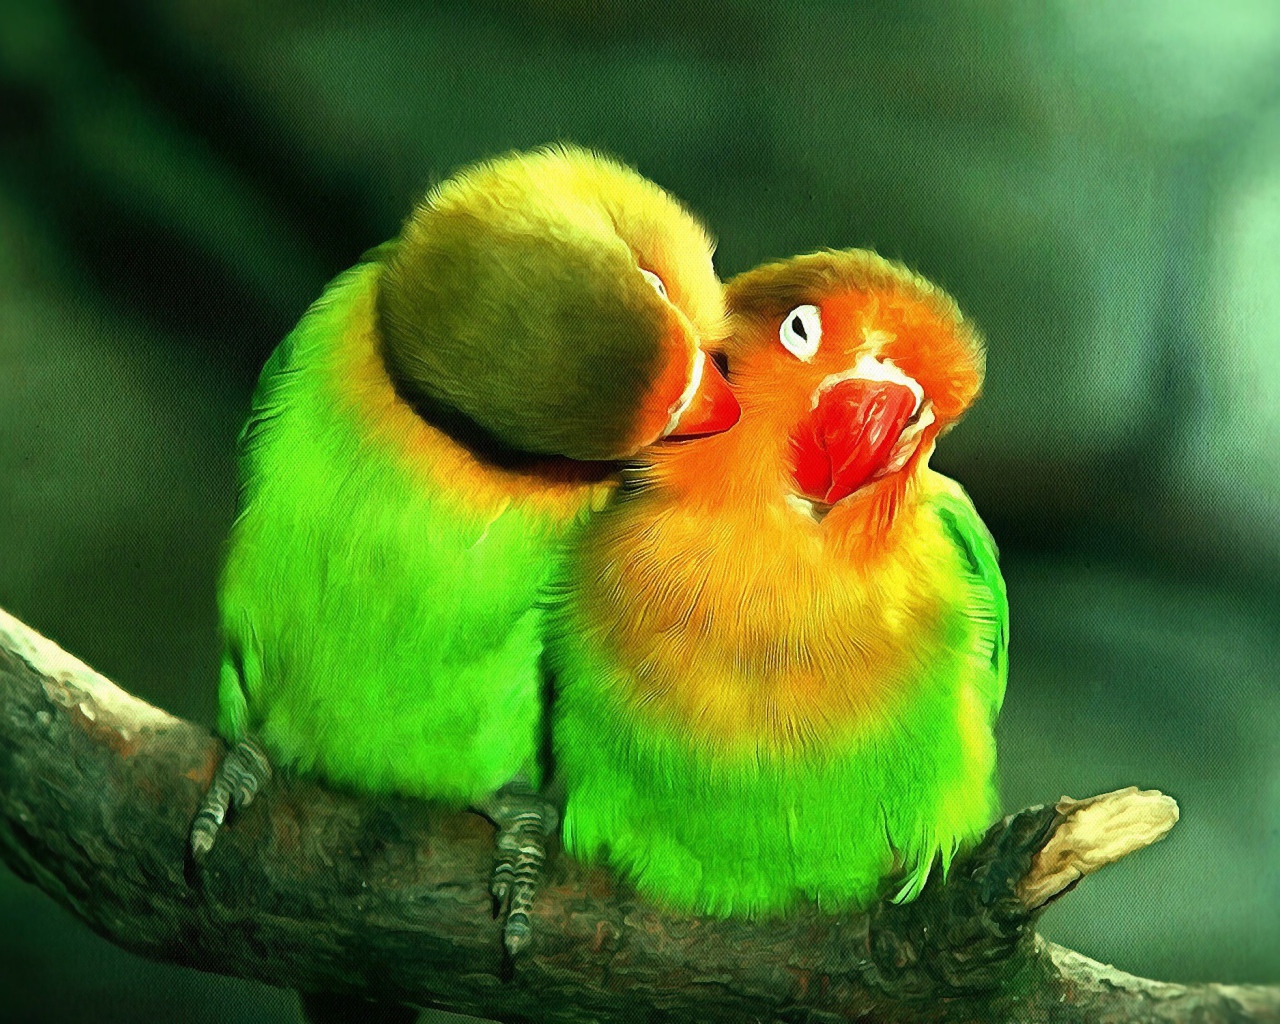 A pair of green parrots